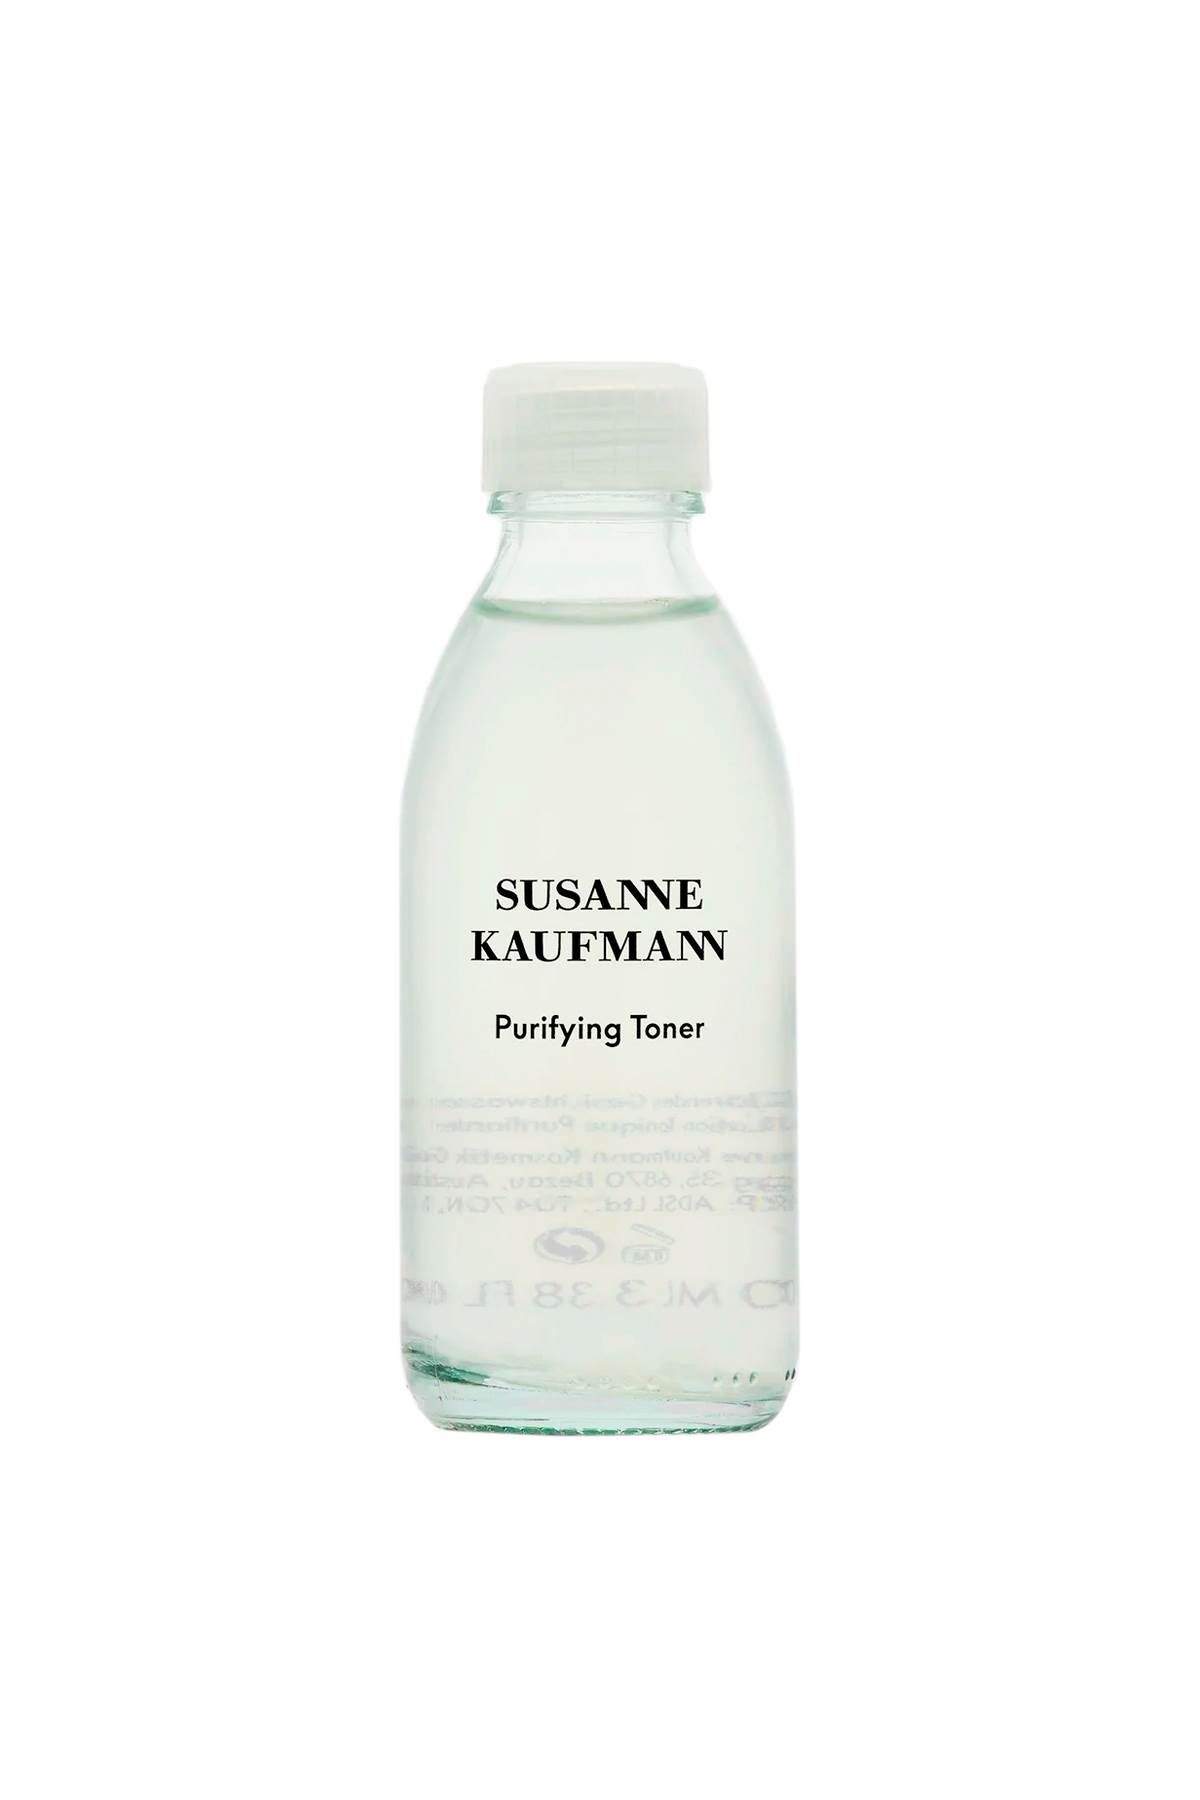 SUSANNE KAUFMANN purifying toner - 100 ml